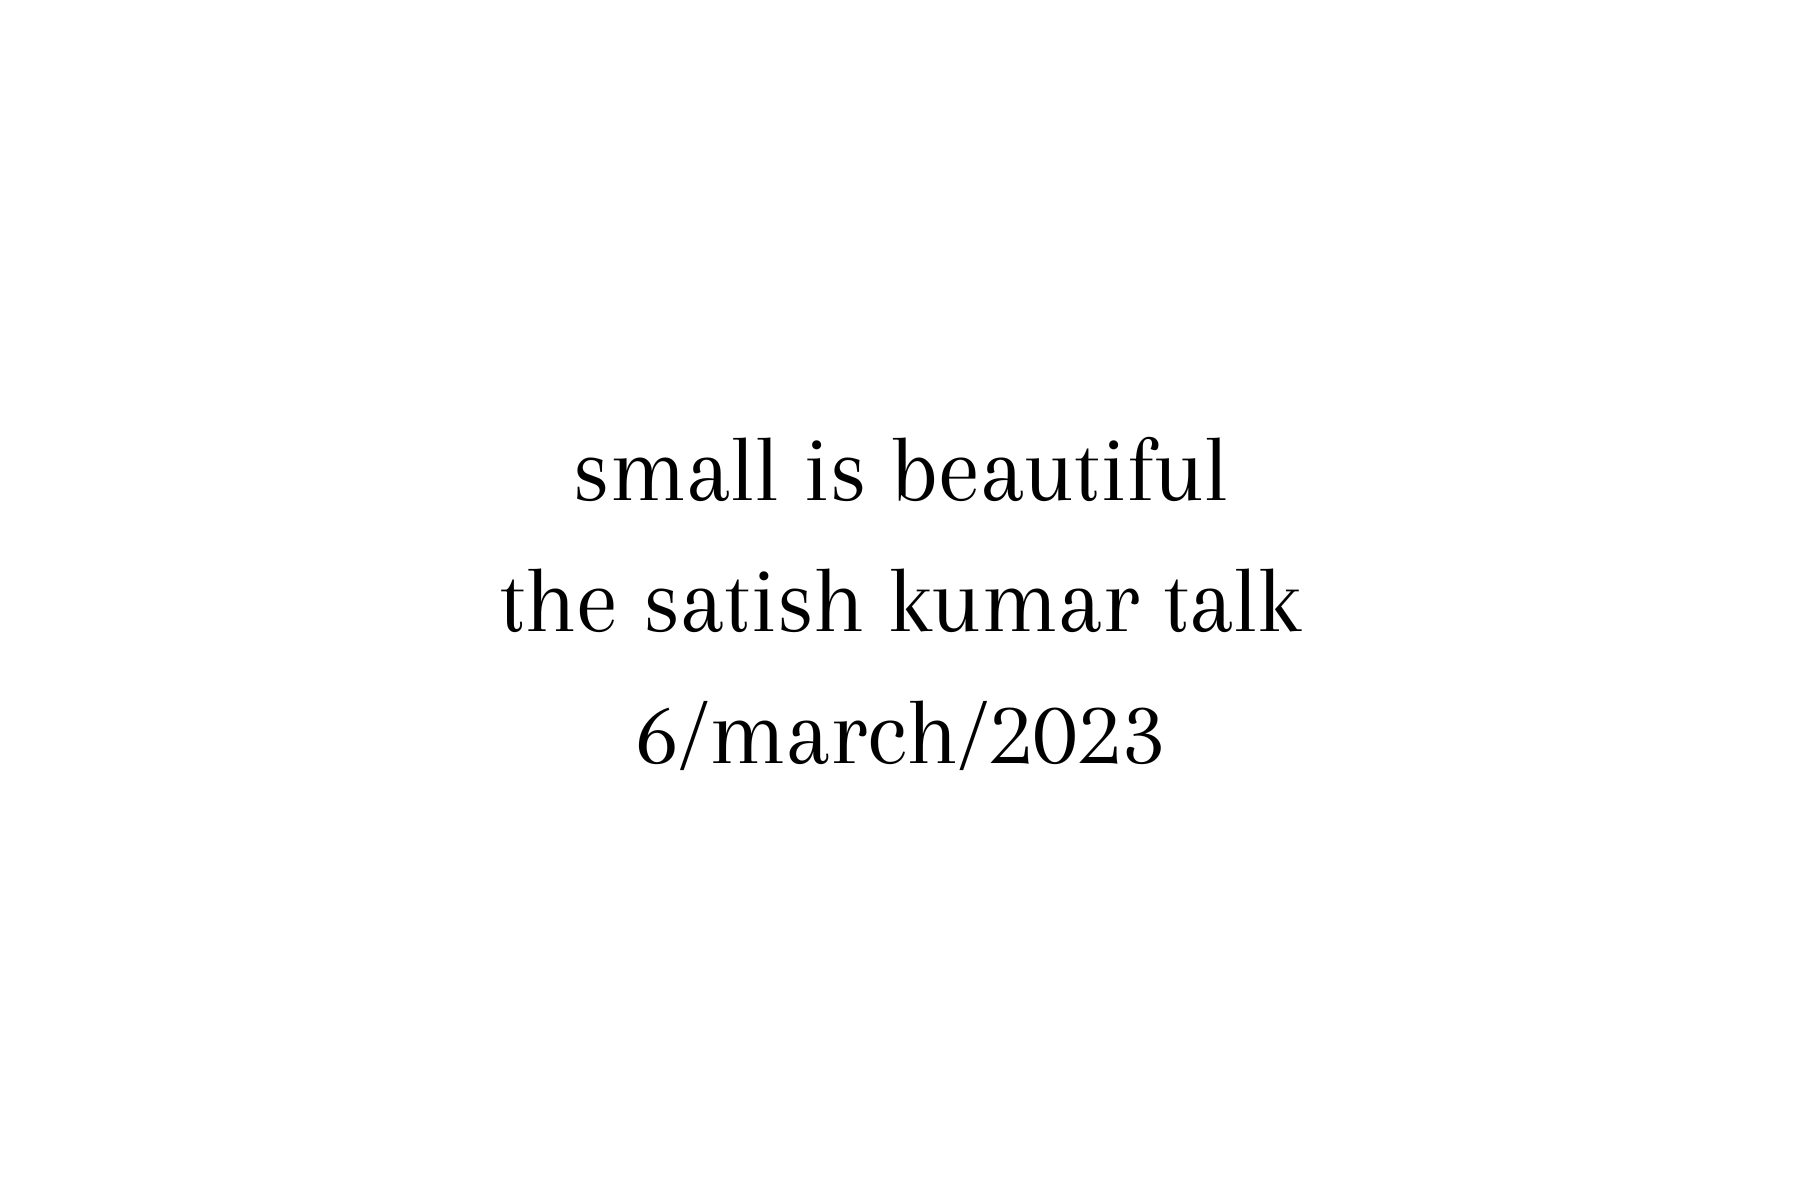 Satish Kumar: A Small Society with Head, Heart & Hands 